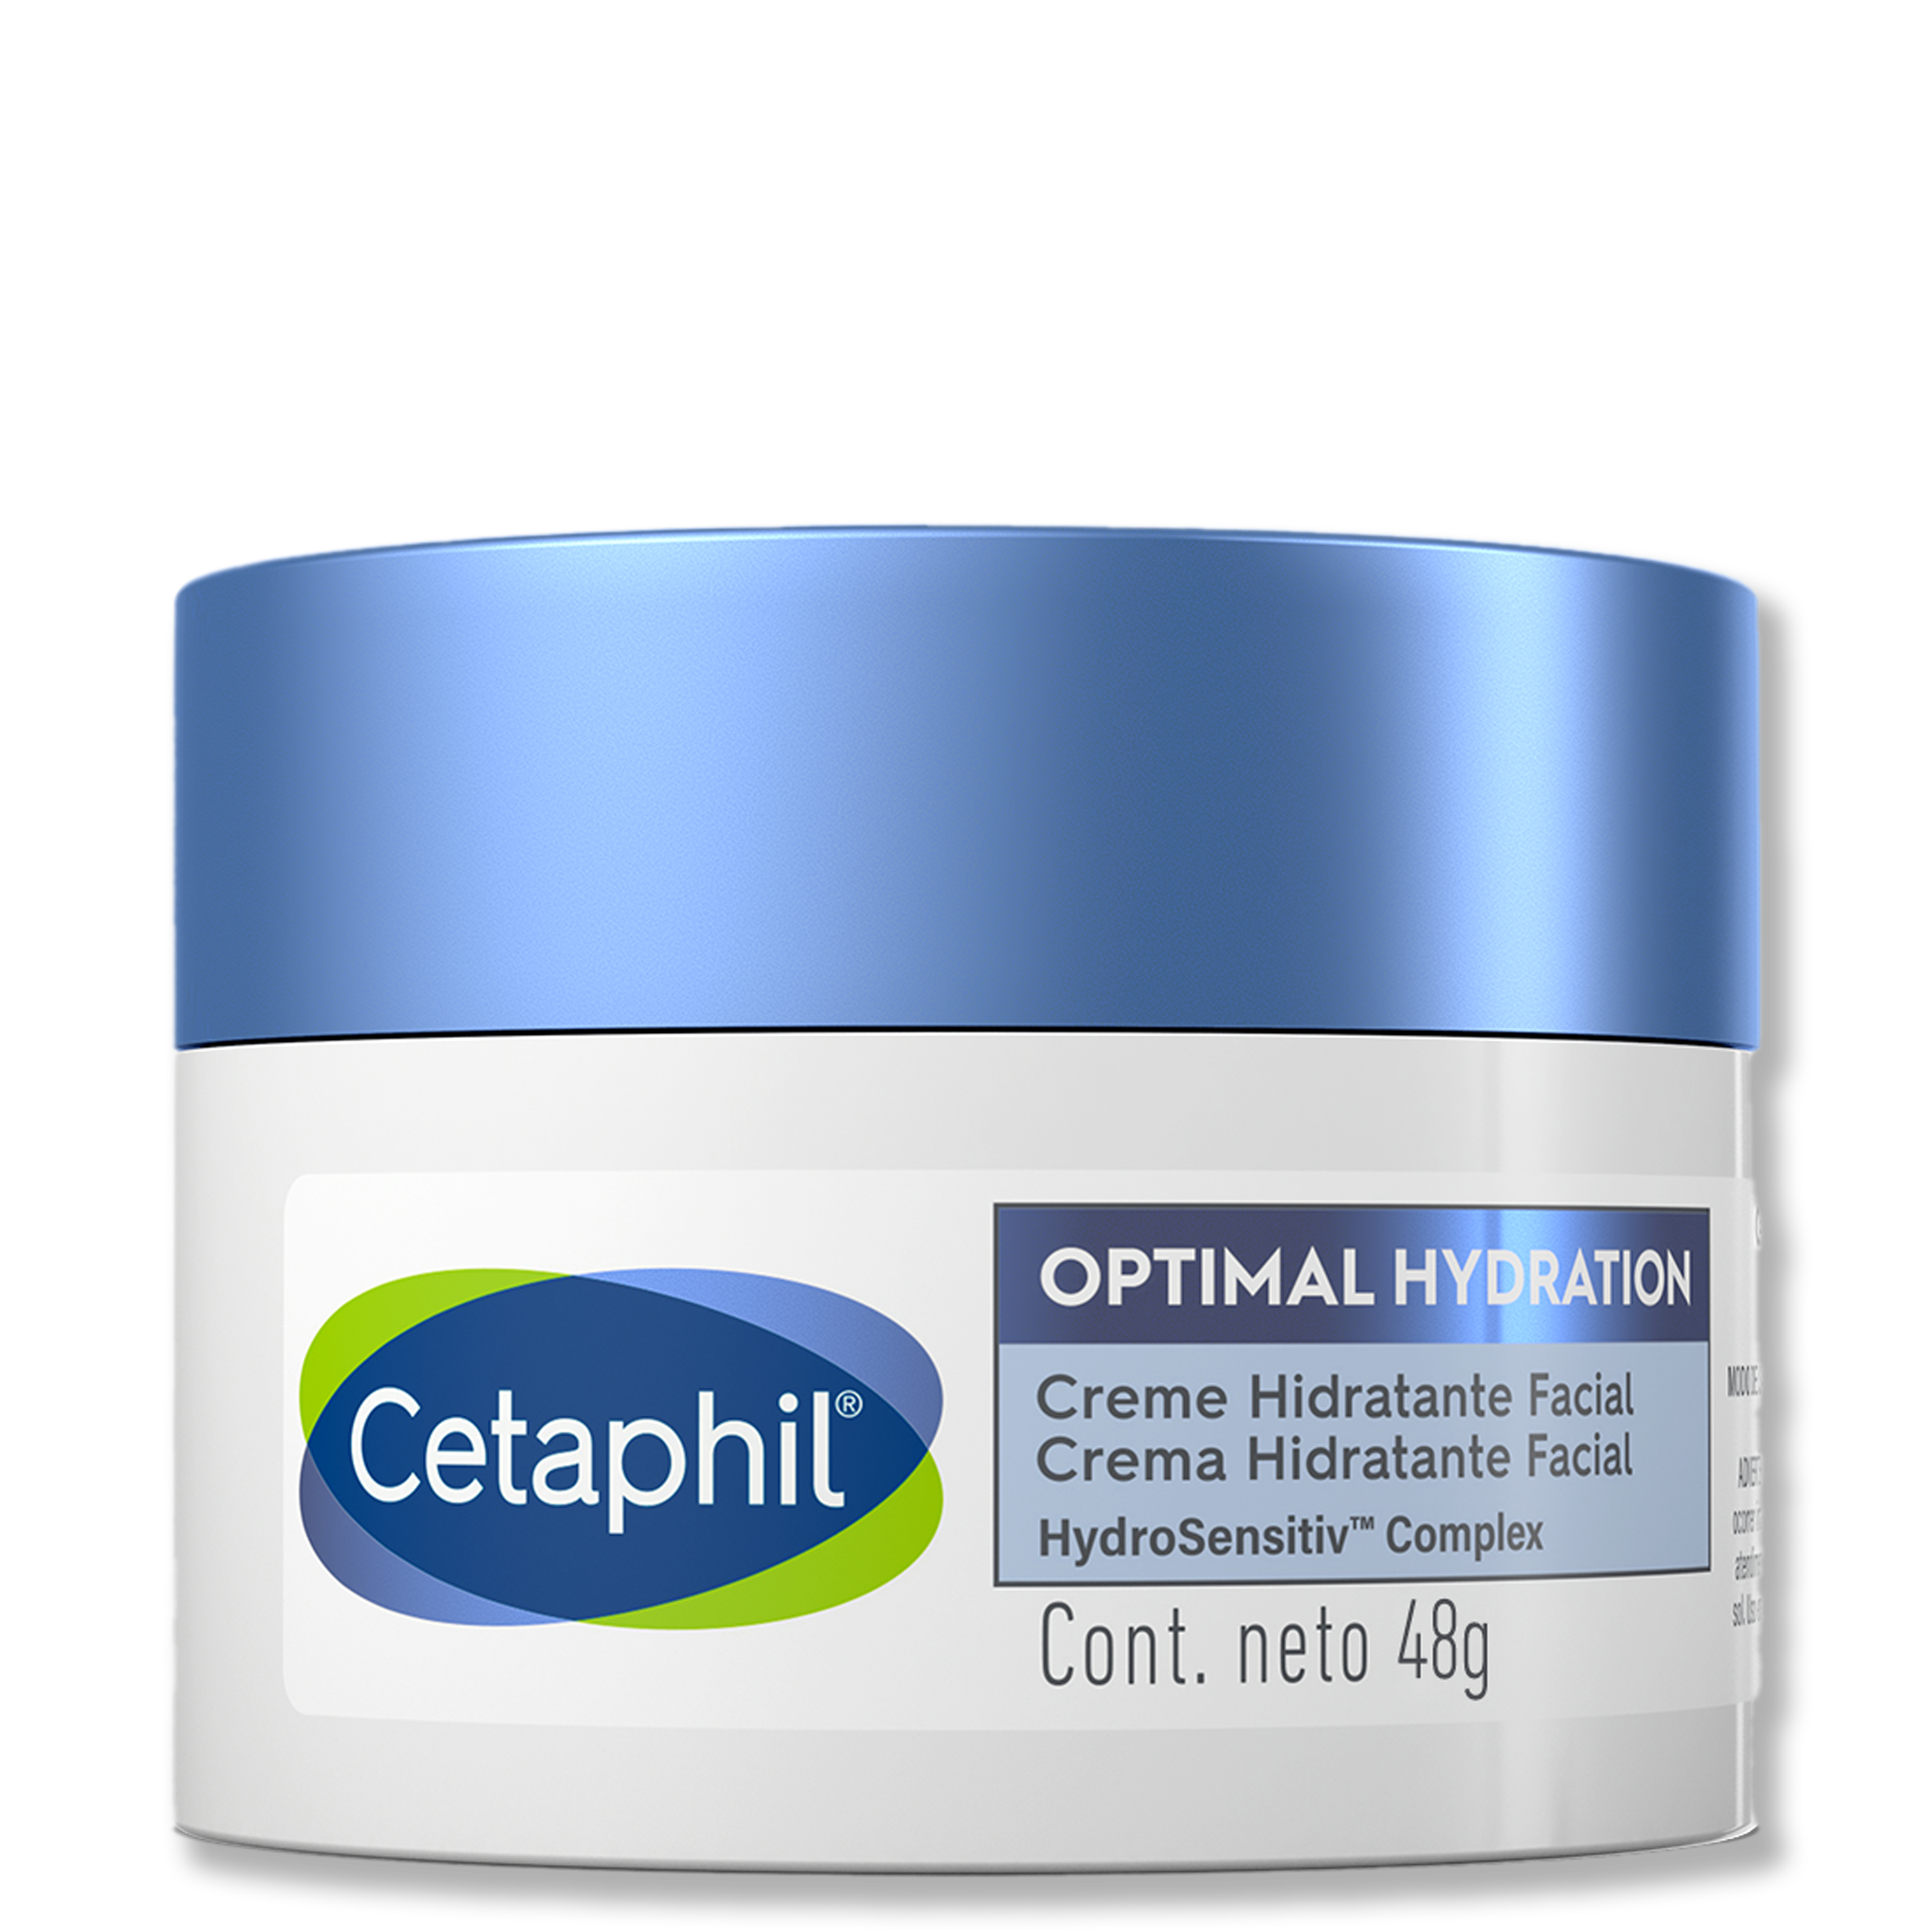 Creme Hidratante Facial Cetaphil Optimal Hydration 50g